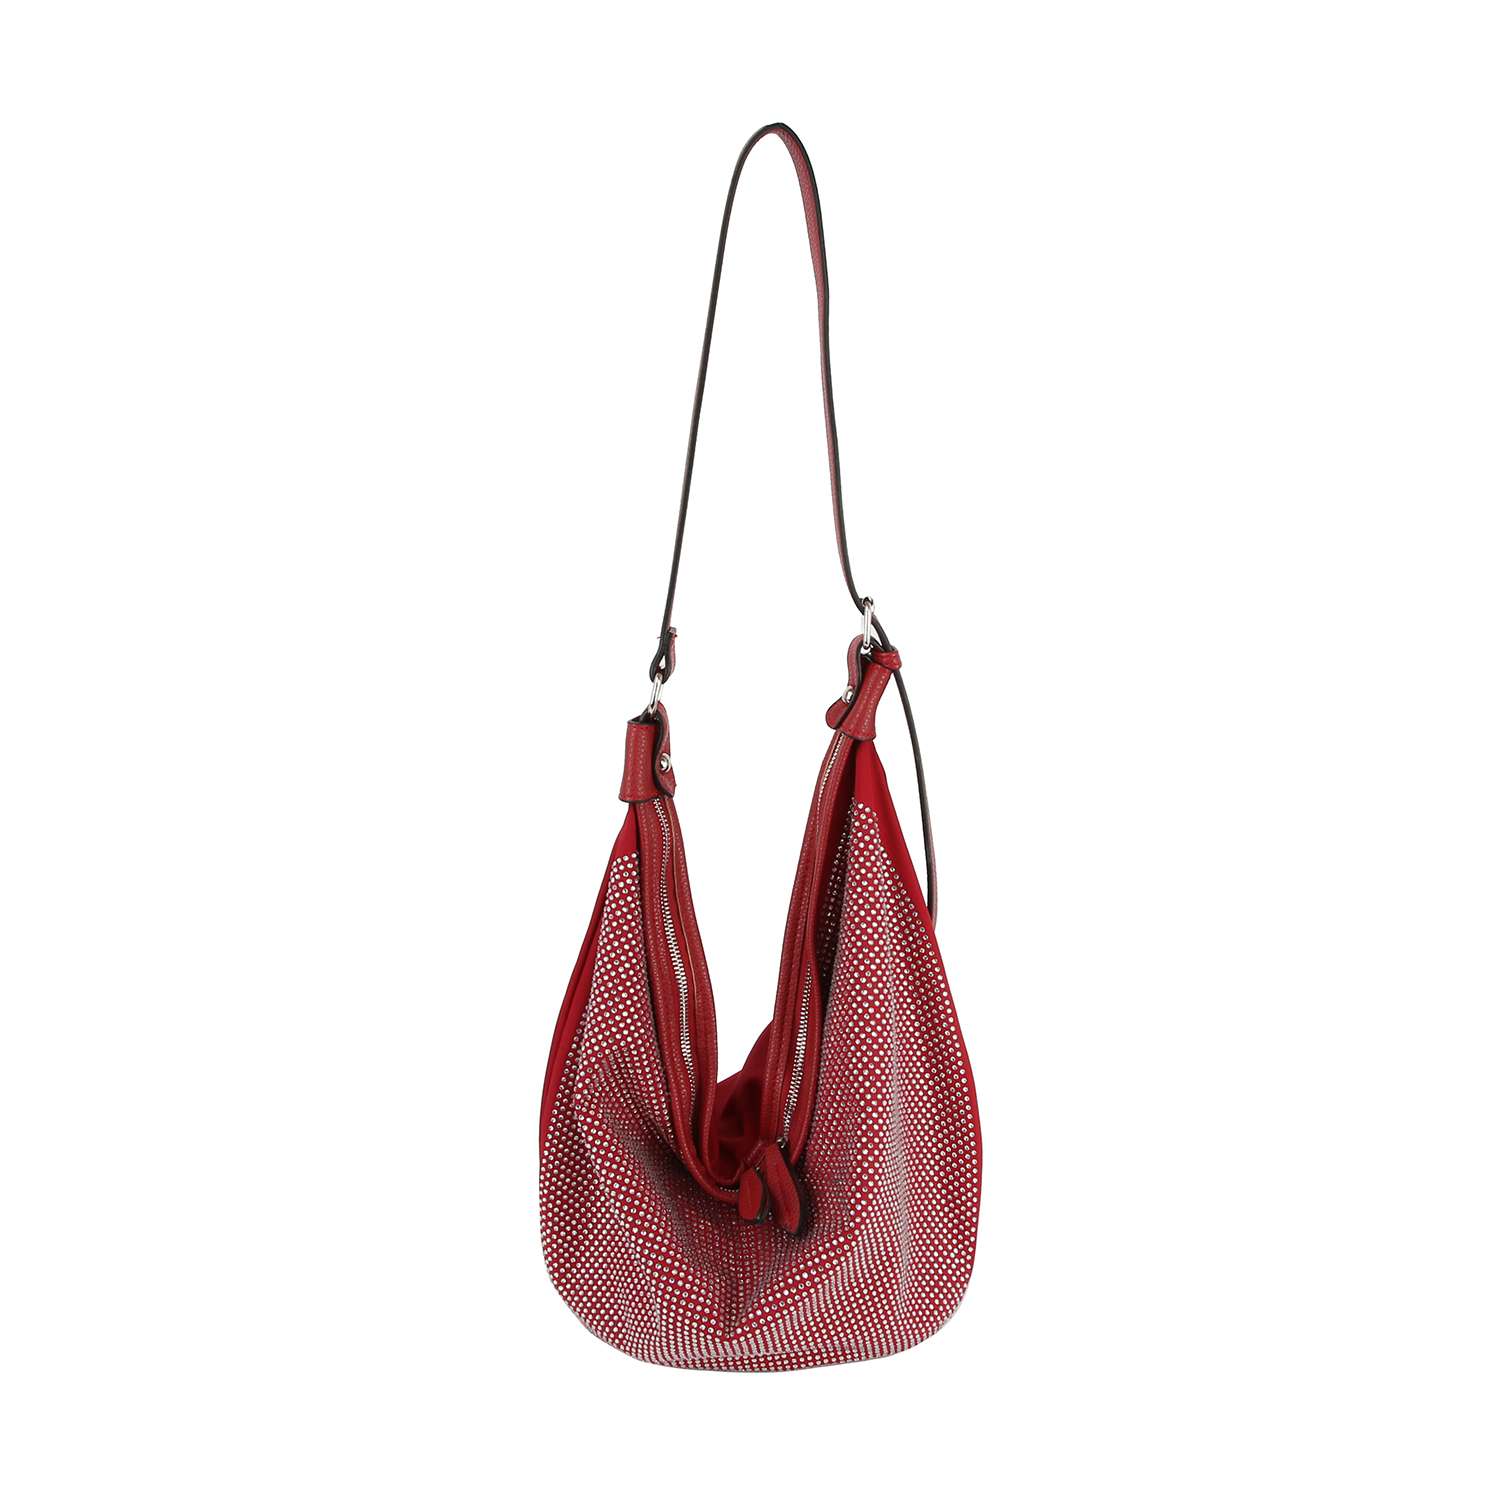 Dazzling Rhinestone Hobo Handbag: Olive - Coco and lulu boutique 